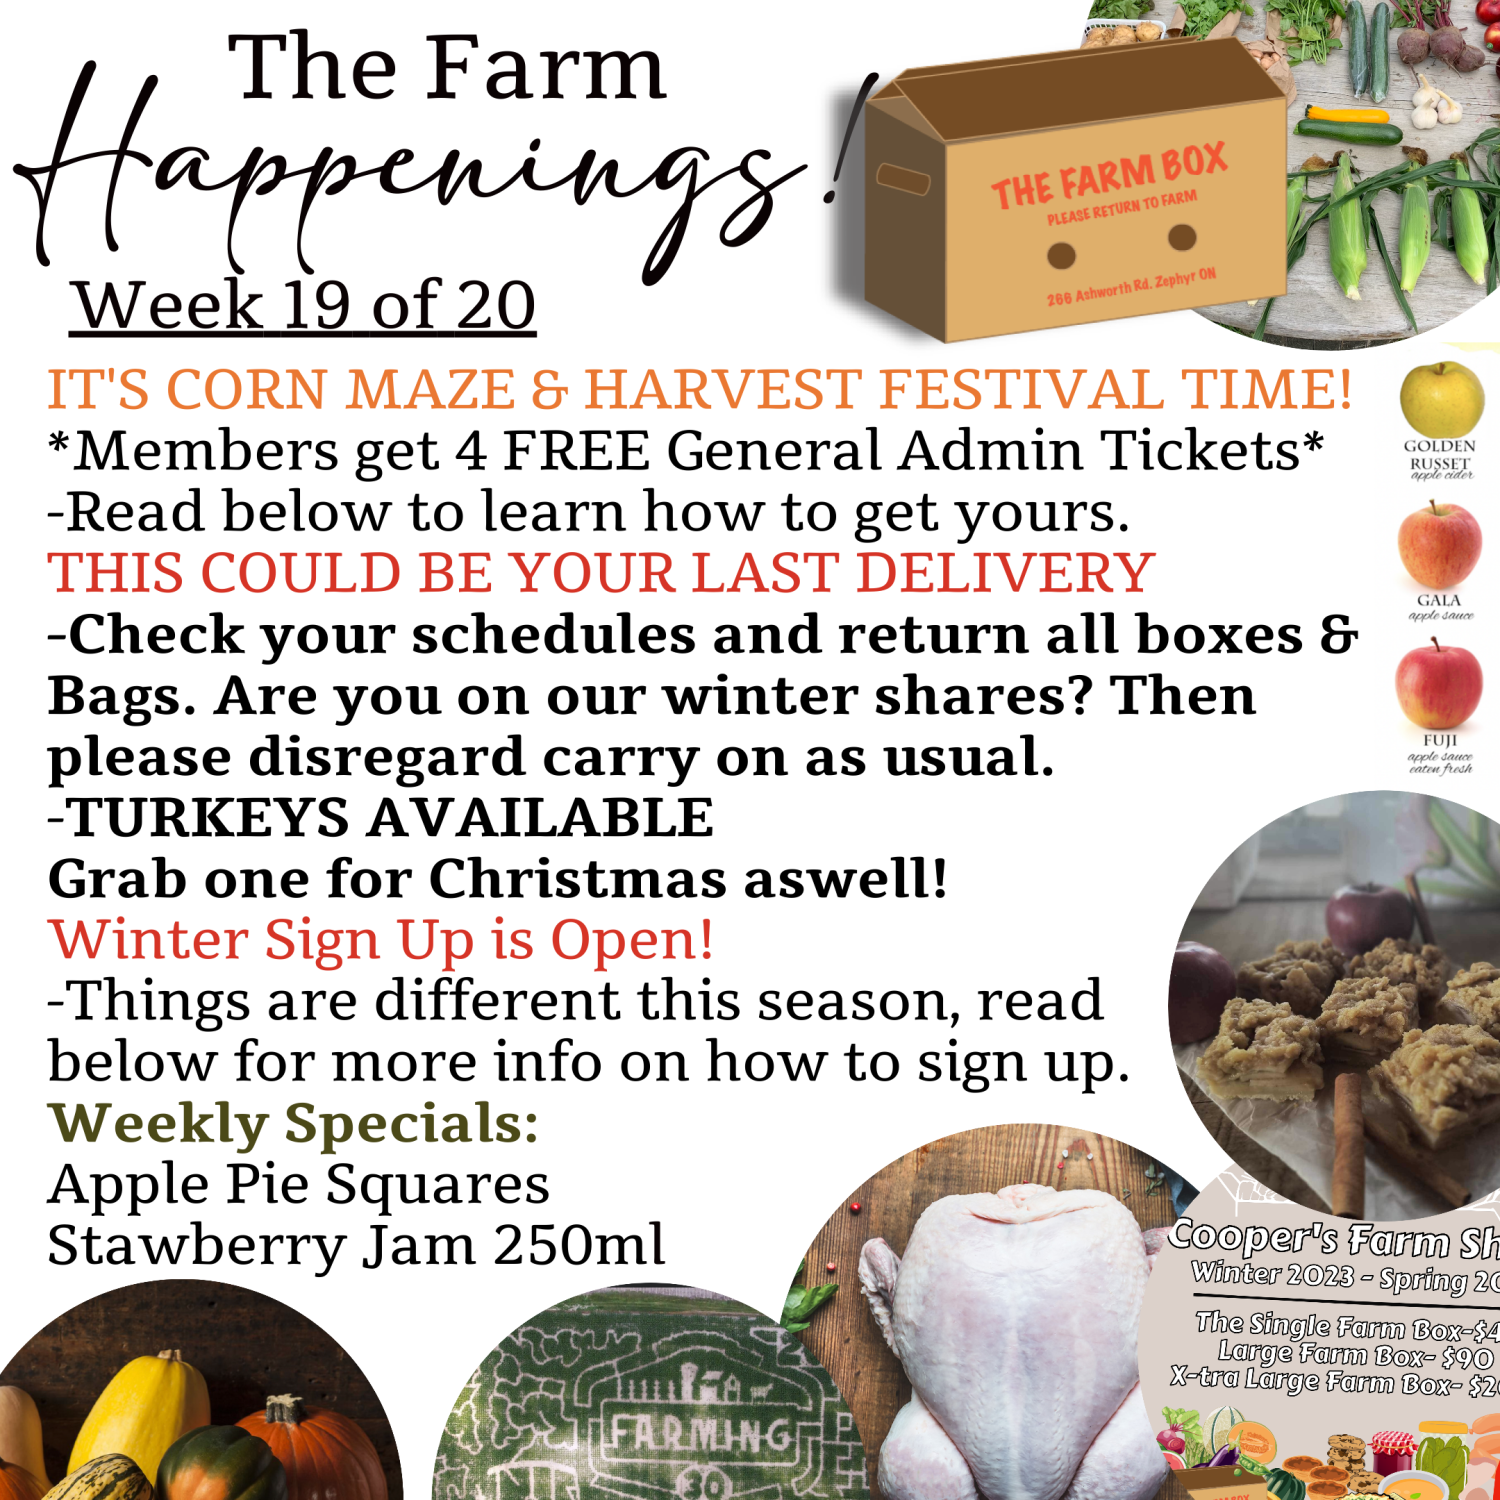 Previous Happening: "The Farm Box"-Coopers CSA Farm Farm Happenings Week 19